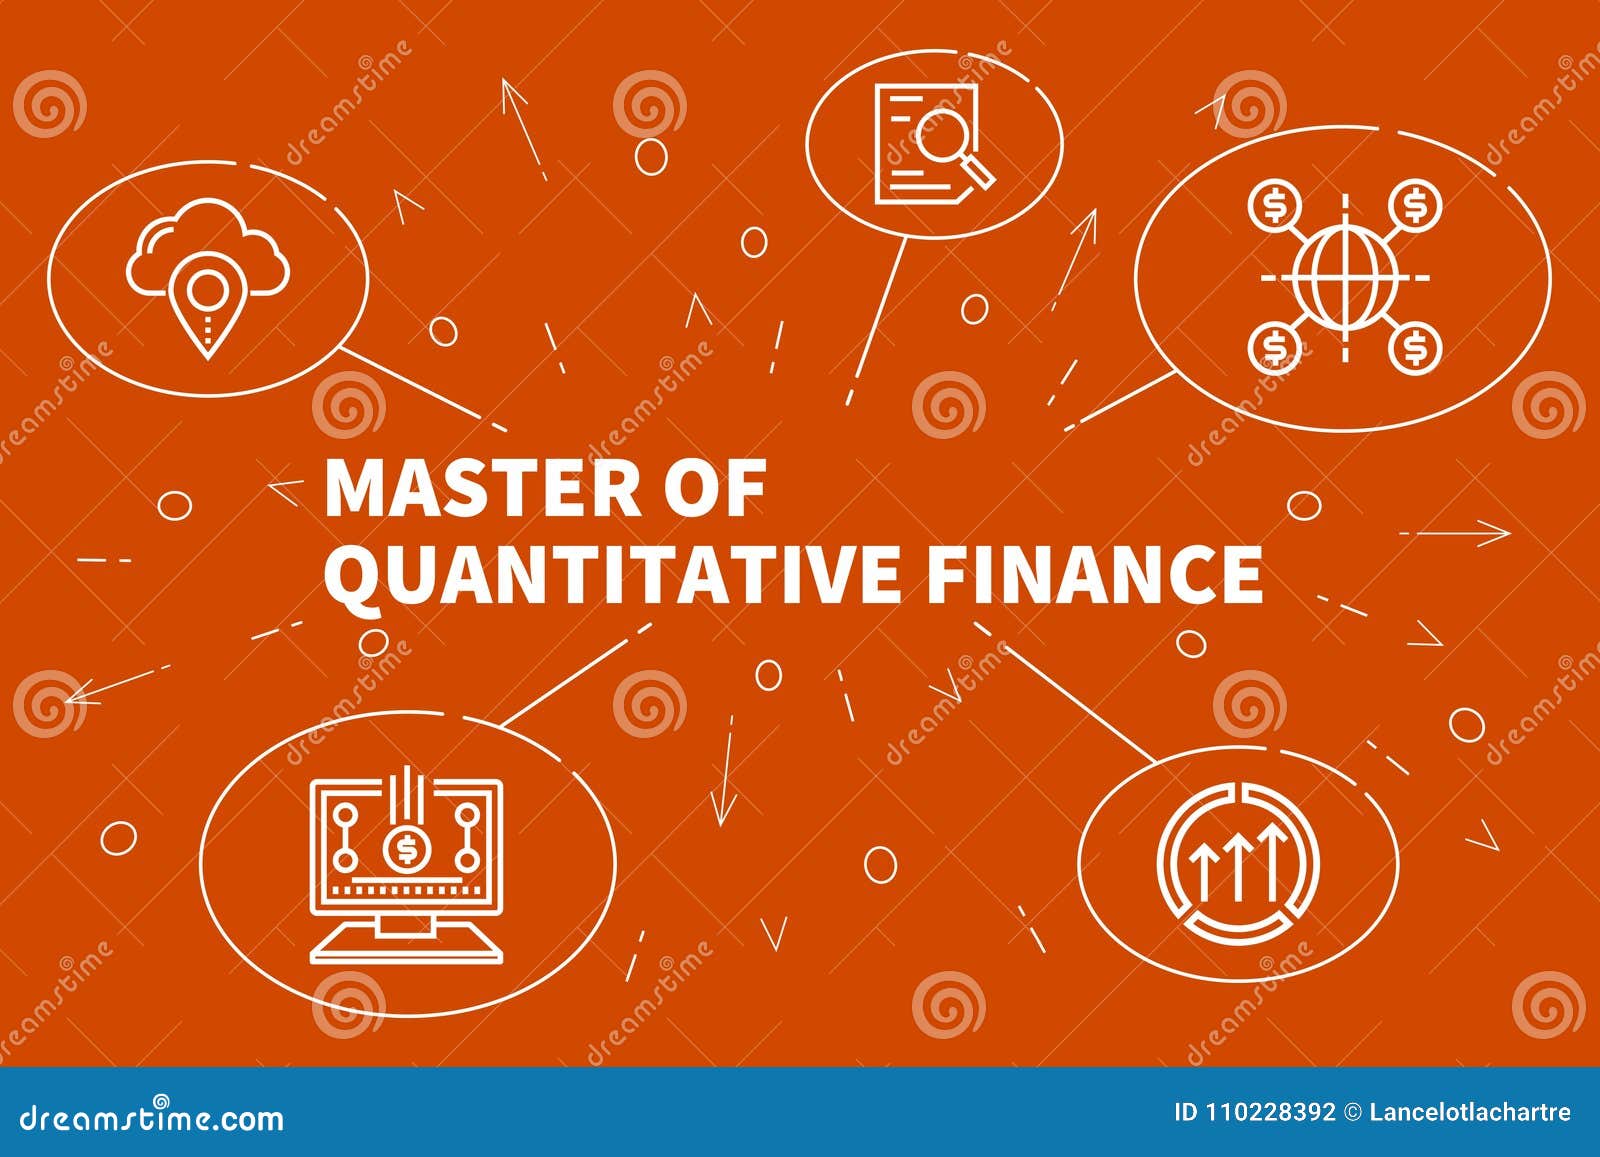 master thesis quantitative finance